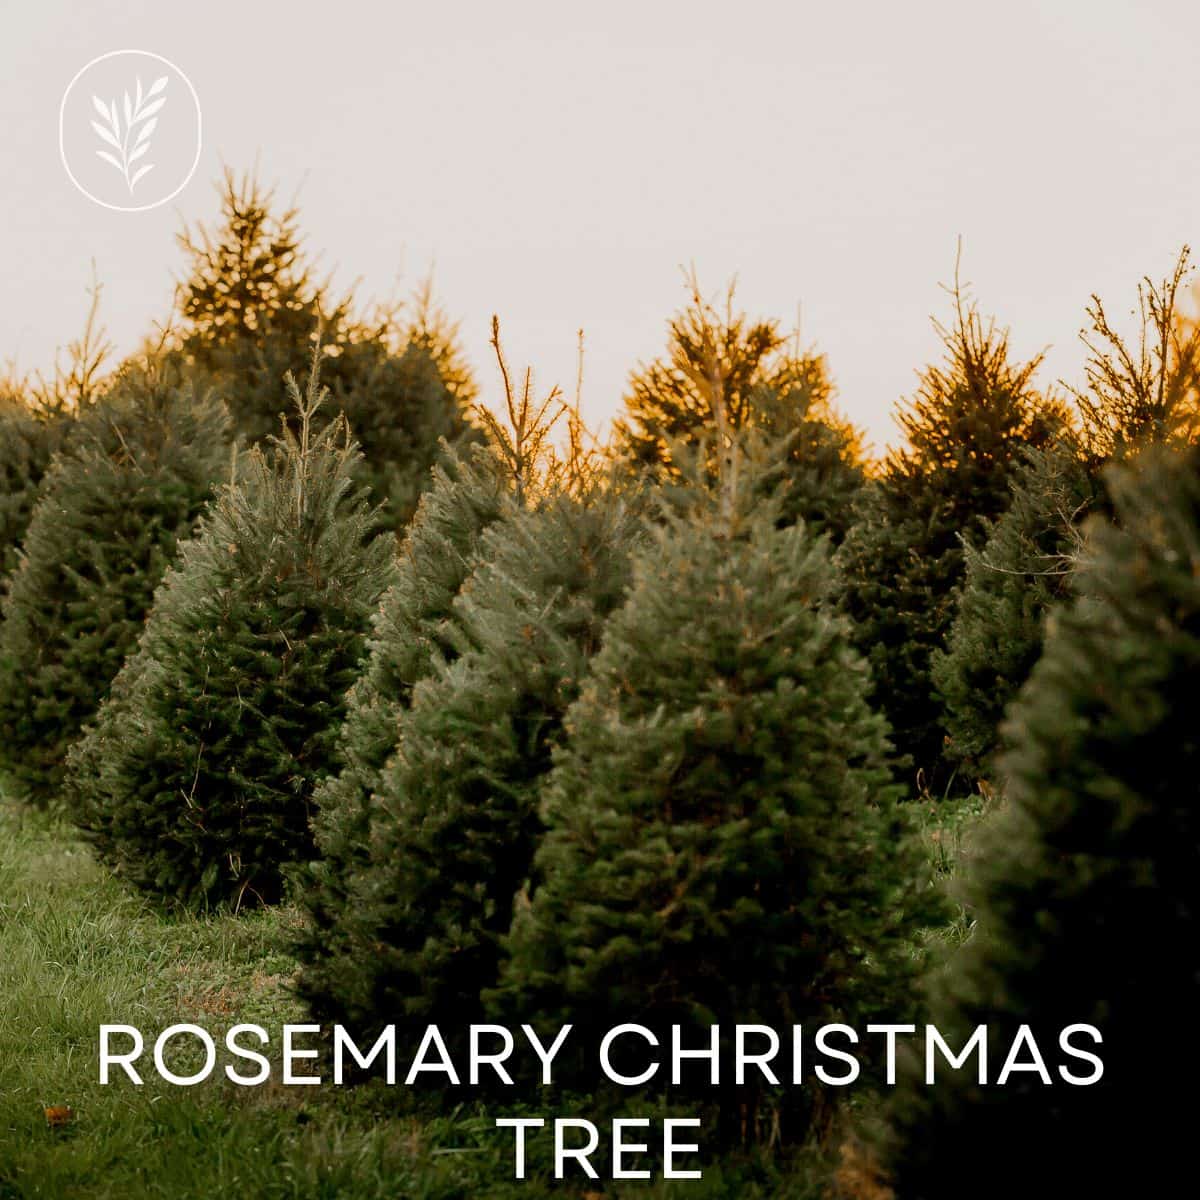 Rosemary christmas tree via @home4theharvest